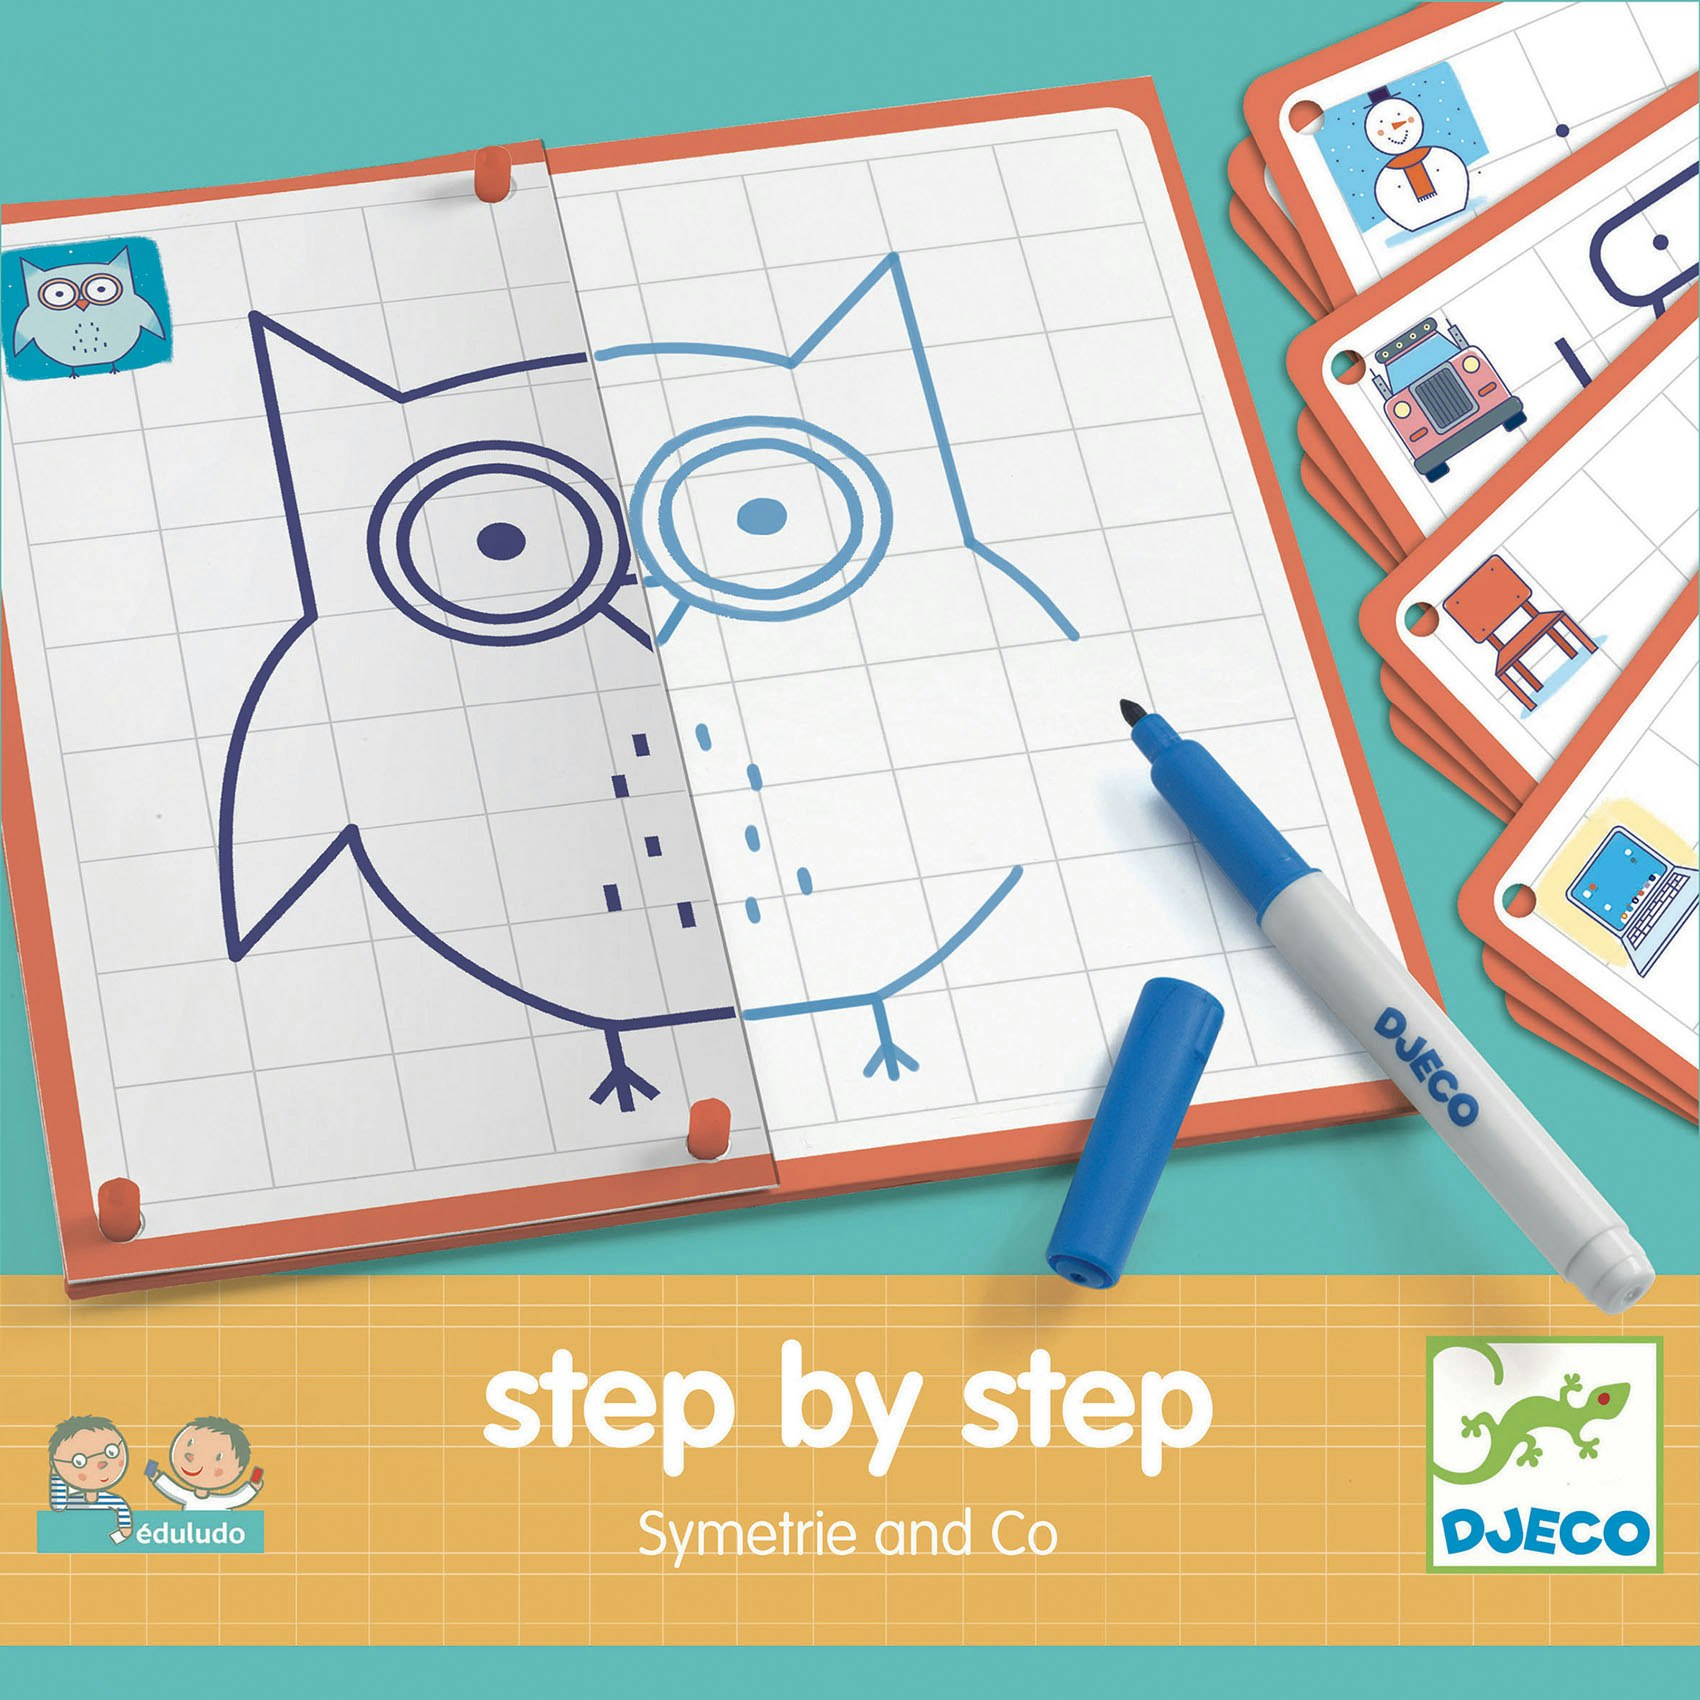 DJECO- Step by step symetrie and Co